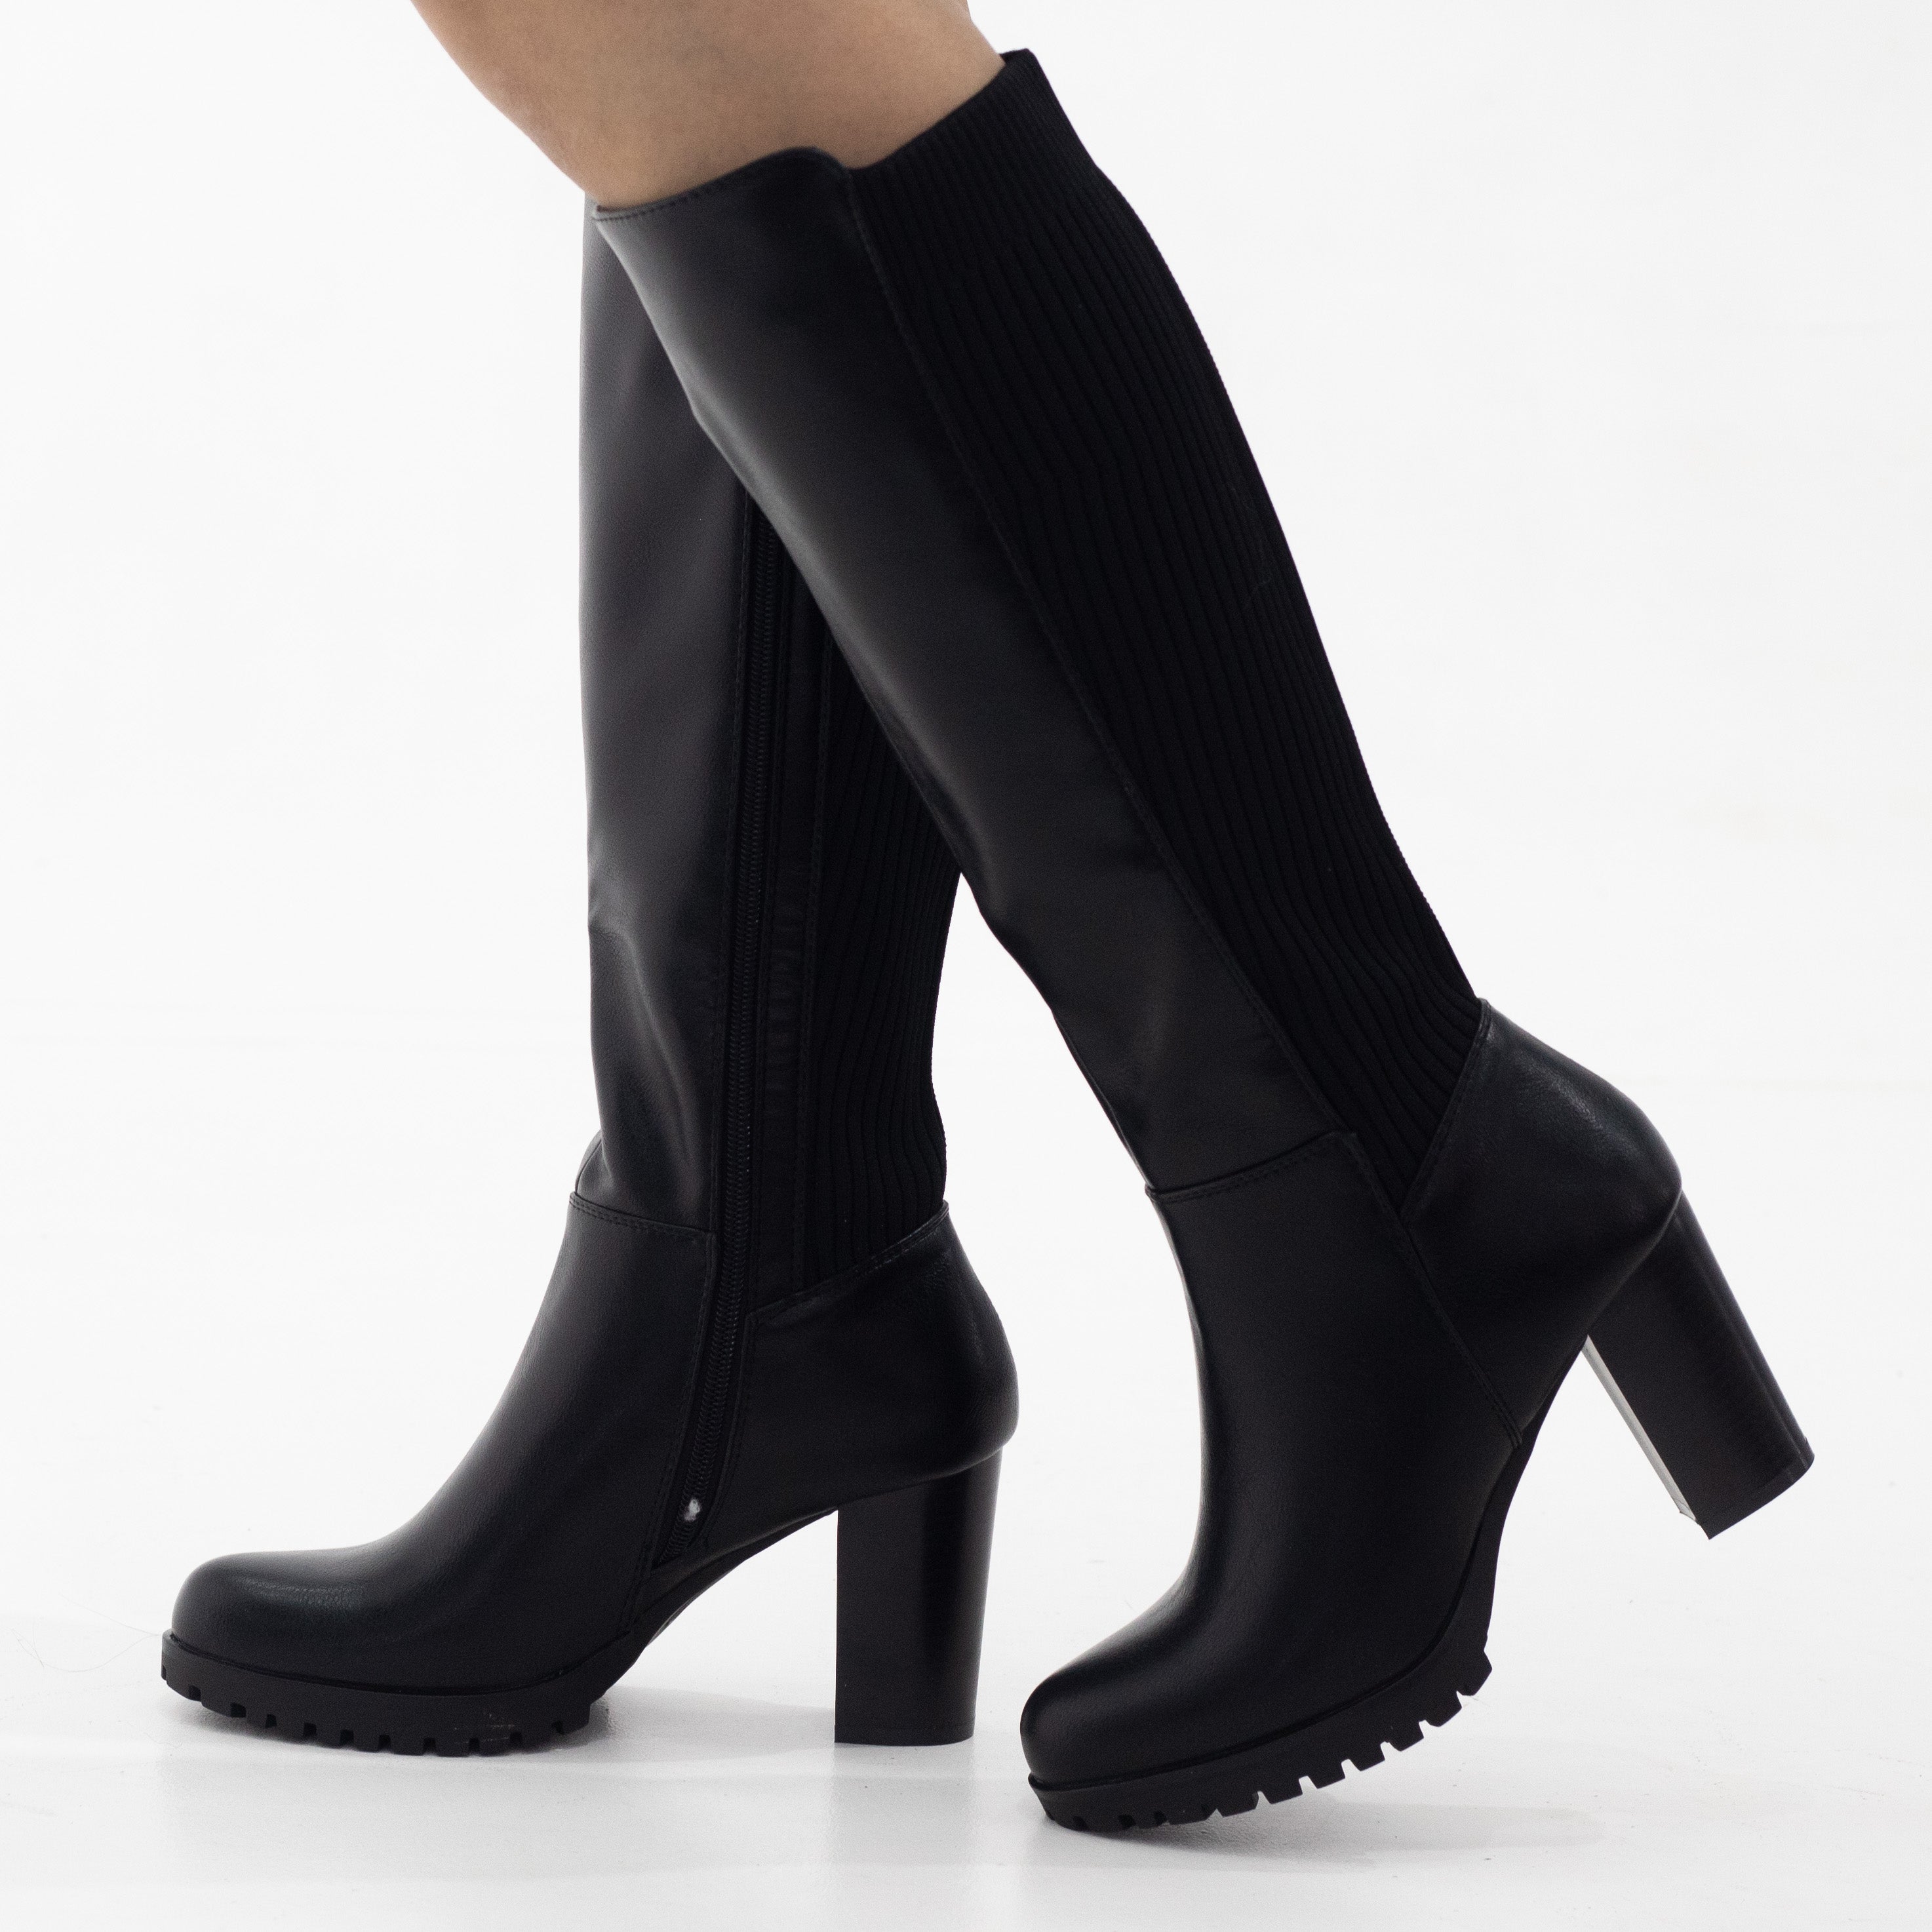 Black knee high with sock mat boots 8cm heel yahira